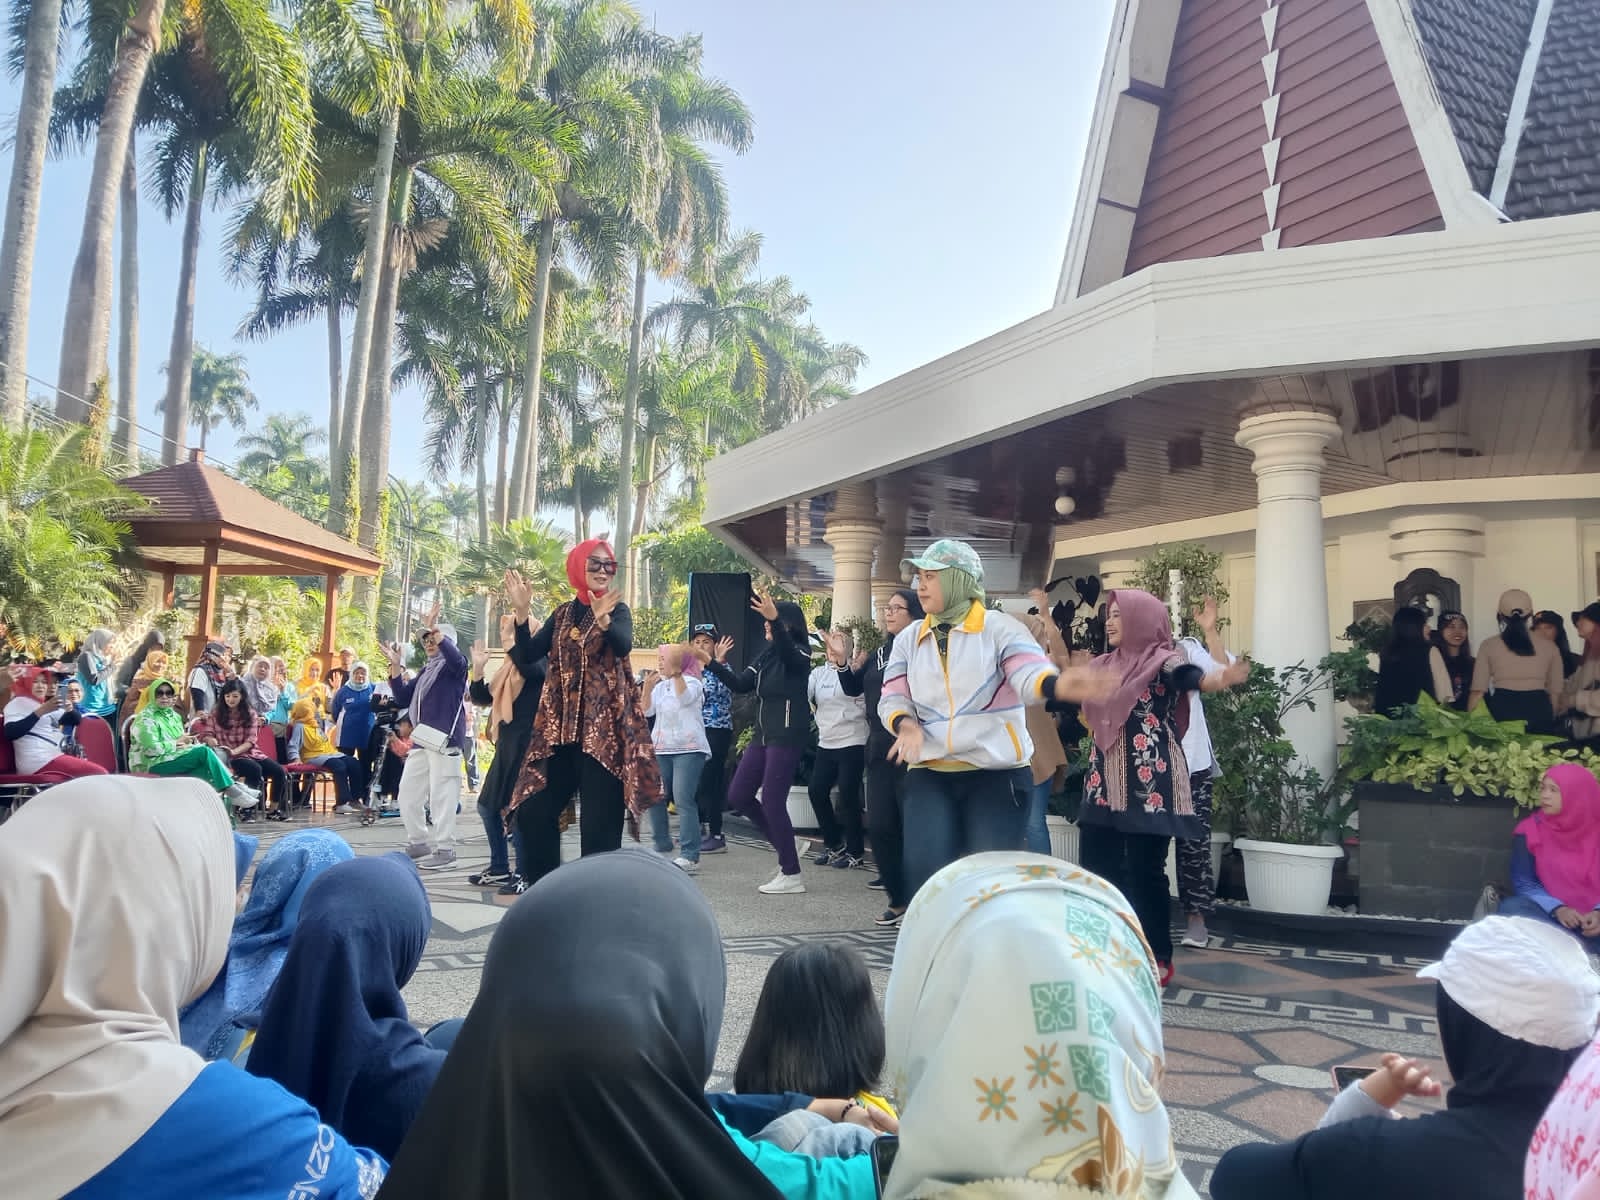 Suasana open house rumah dinas wali kota malang di Jalan Ijen, Kota Malang yang melibatkan UMKM